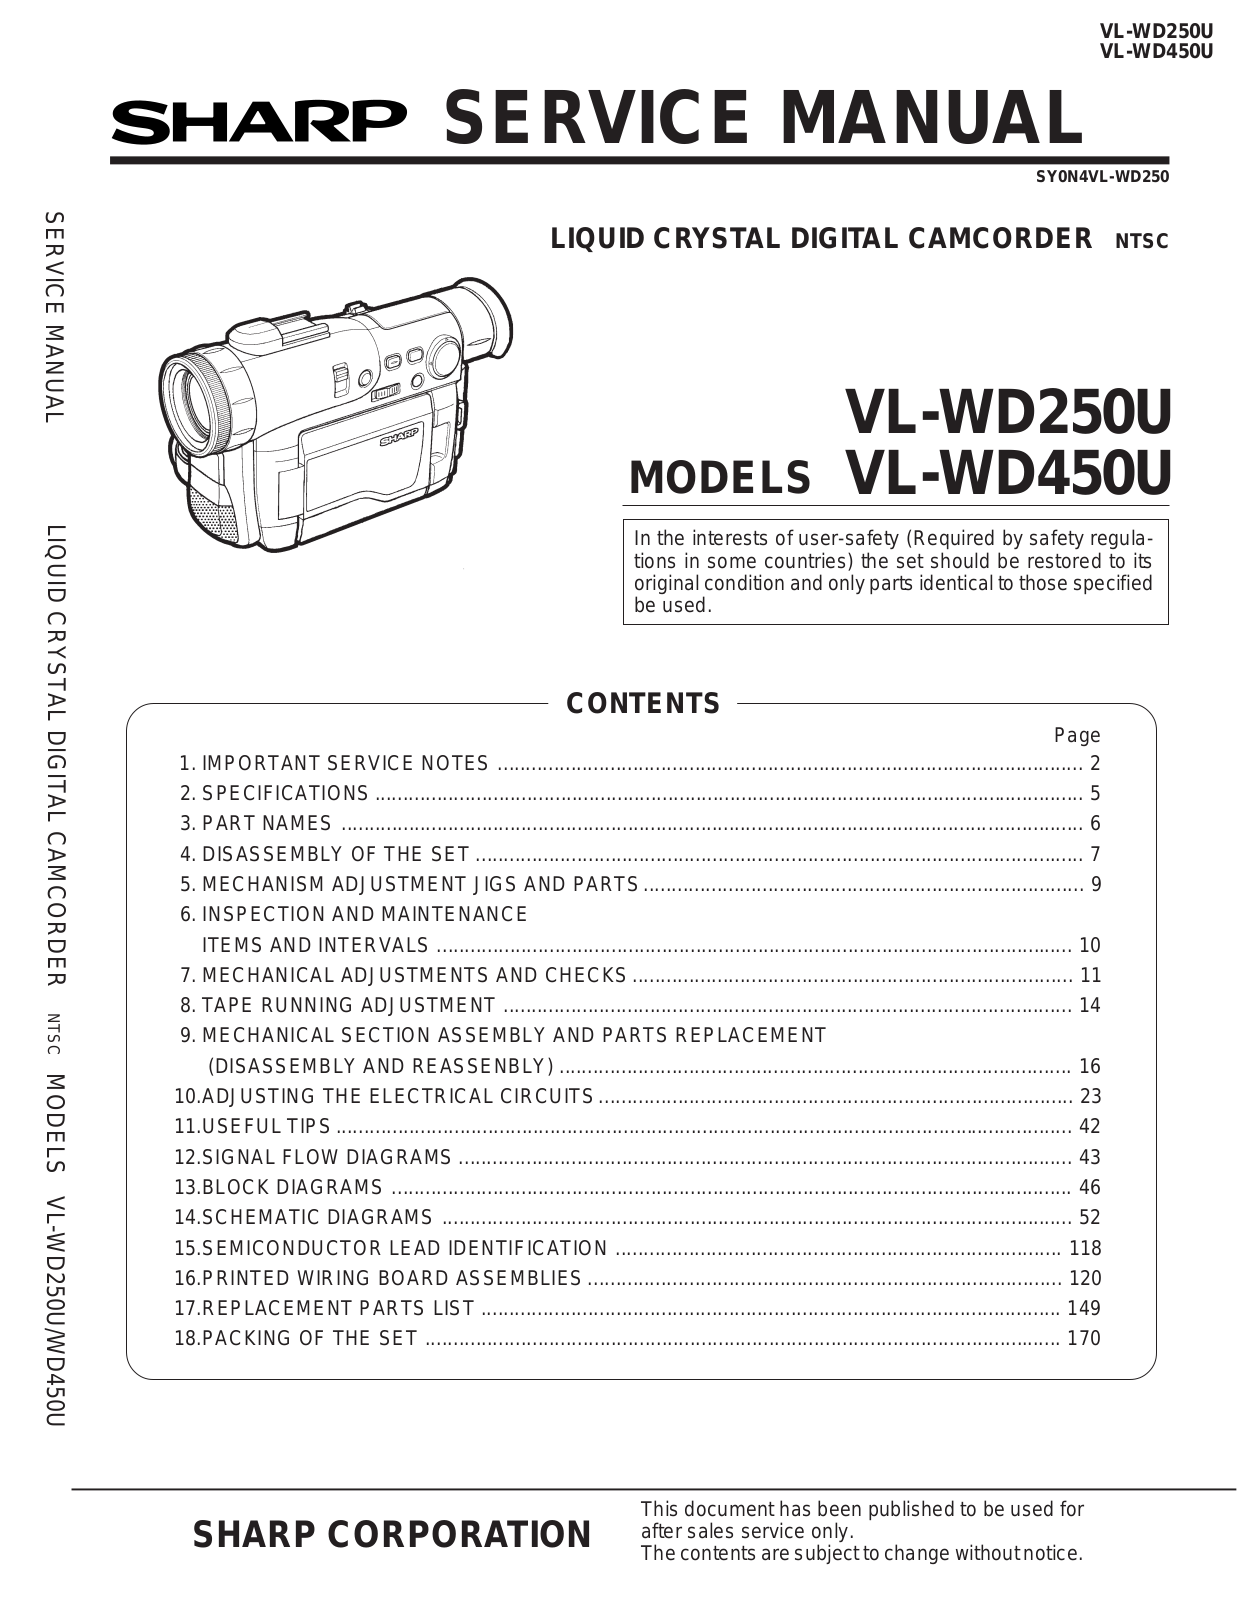 SHARP VLWD250, VLWD250U, VLWD450U Service Manual